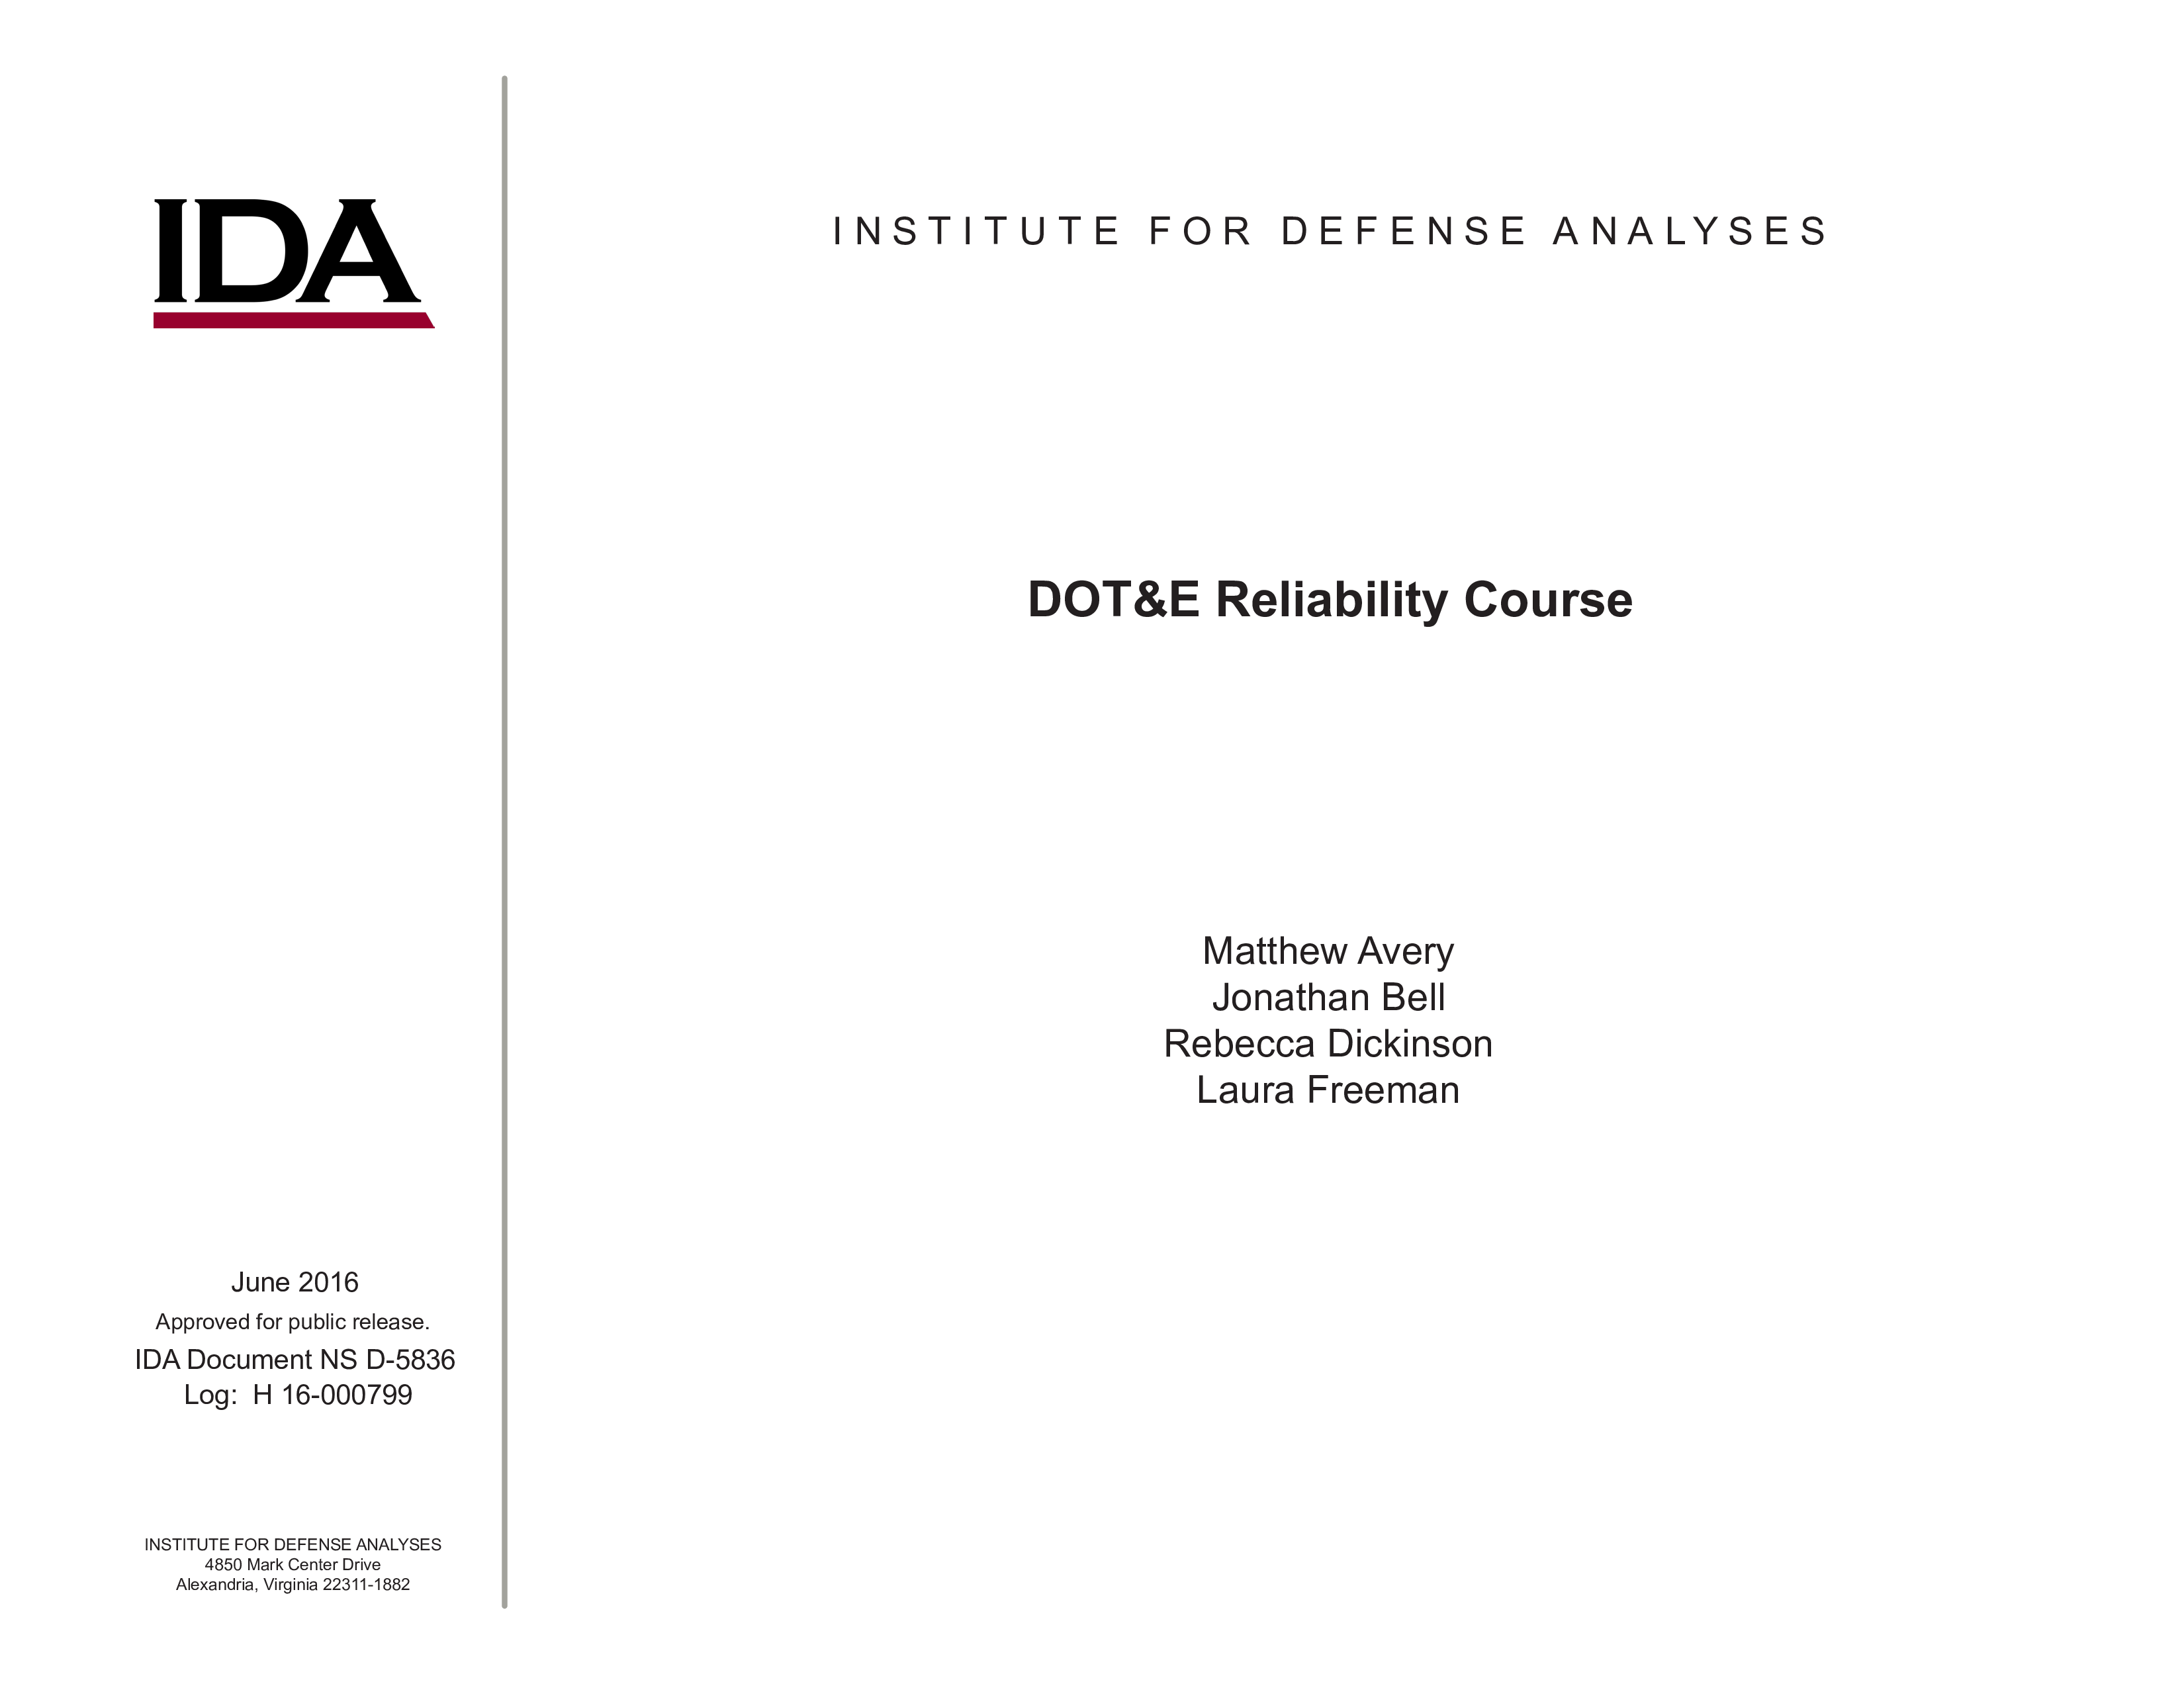 DOT&E Reliability Course